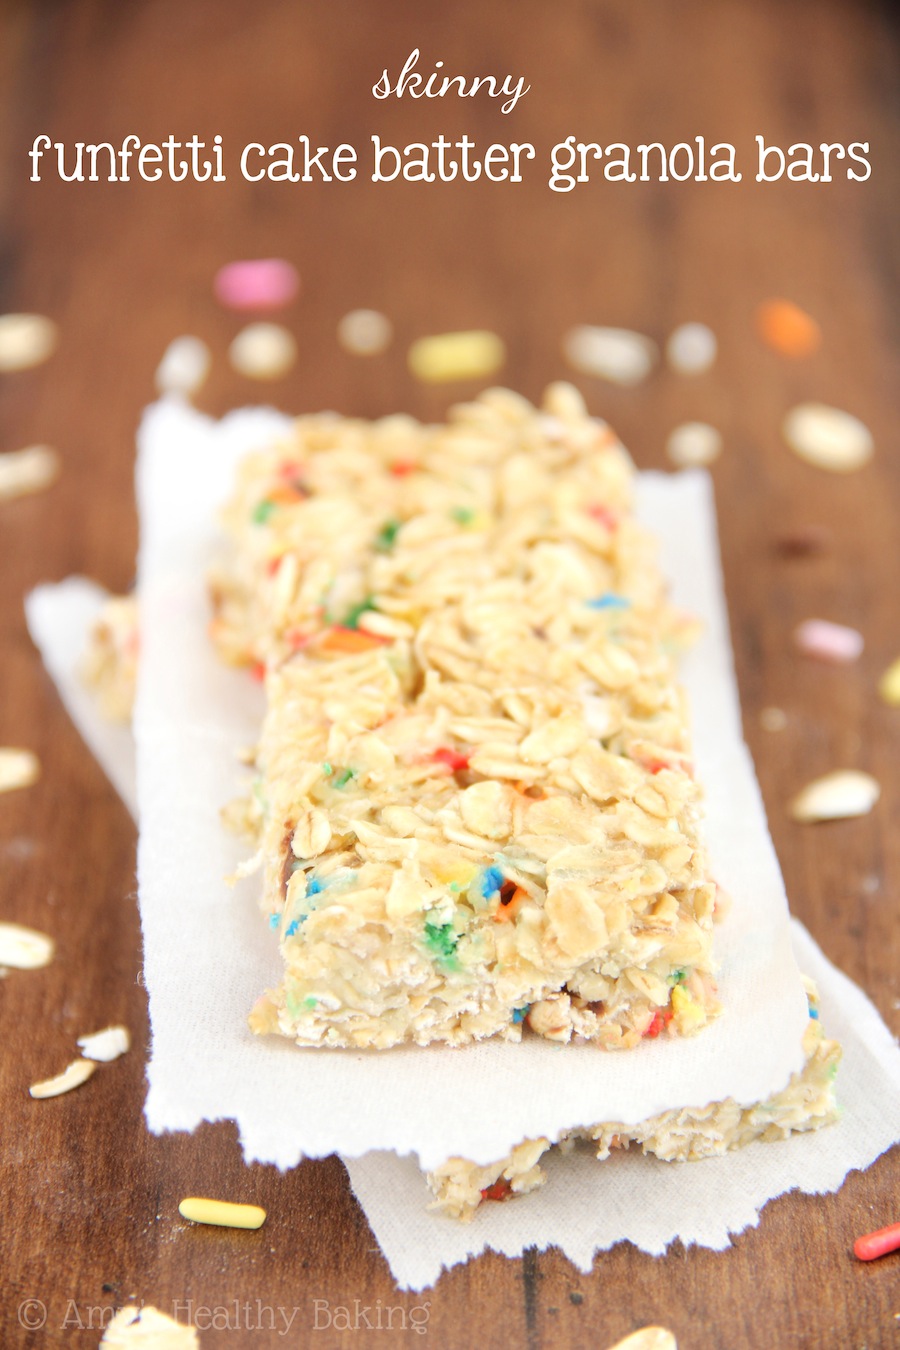 http://amyshealthybaking.com/blog/2014/04/25/skinny-funfetti-cake-batter-granola-bars/